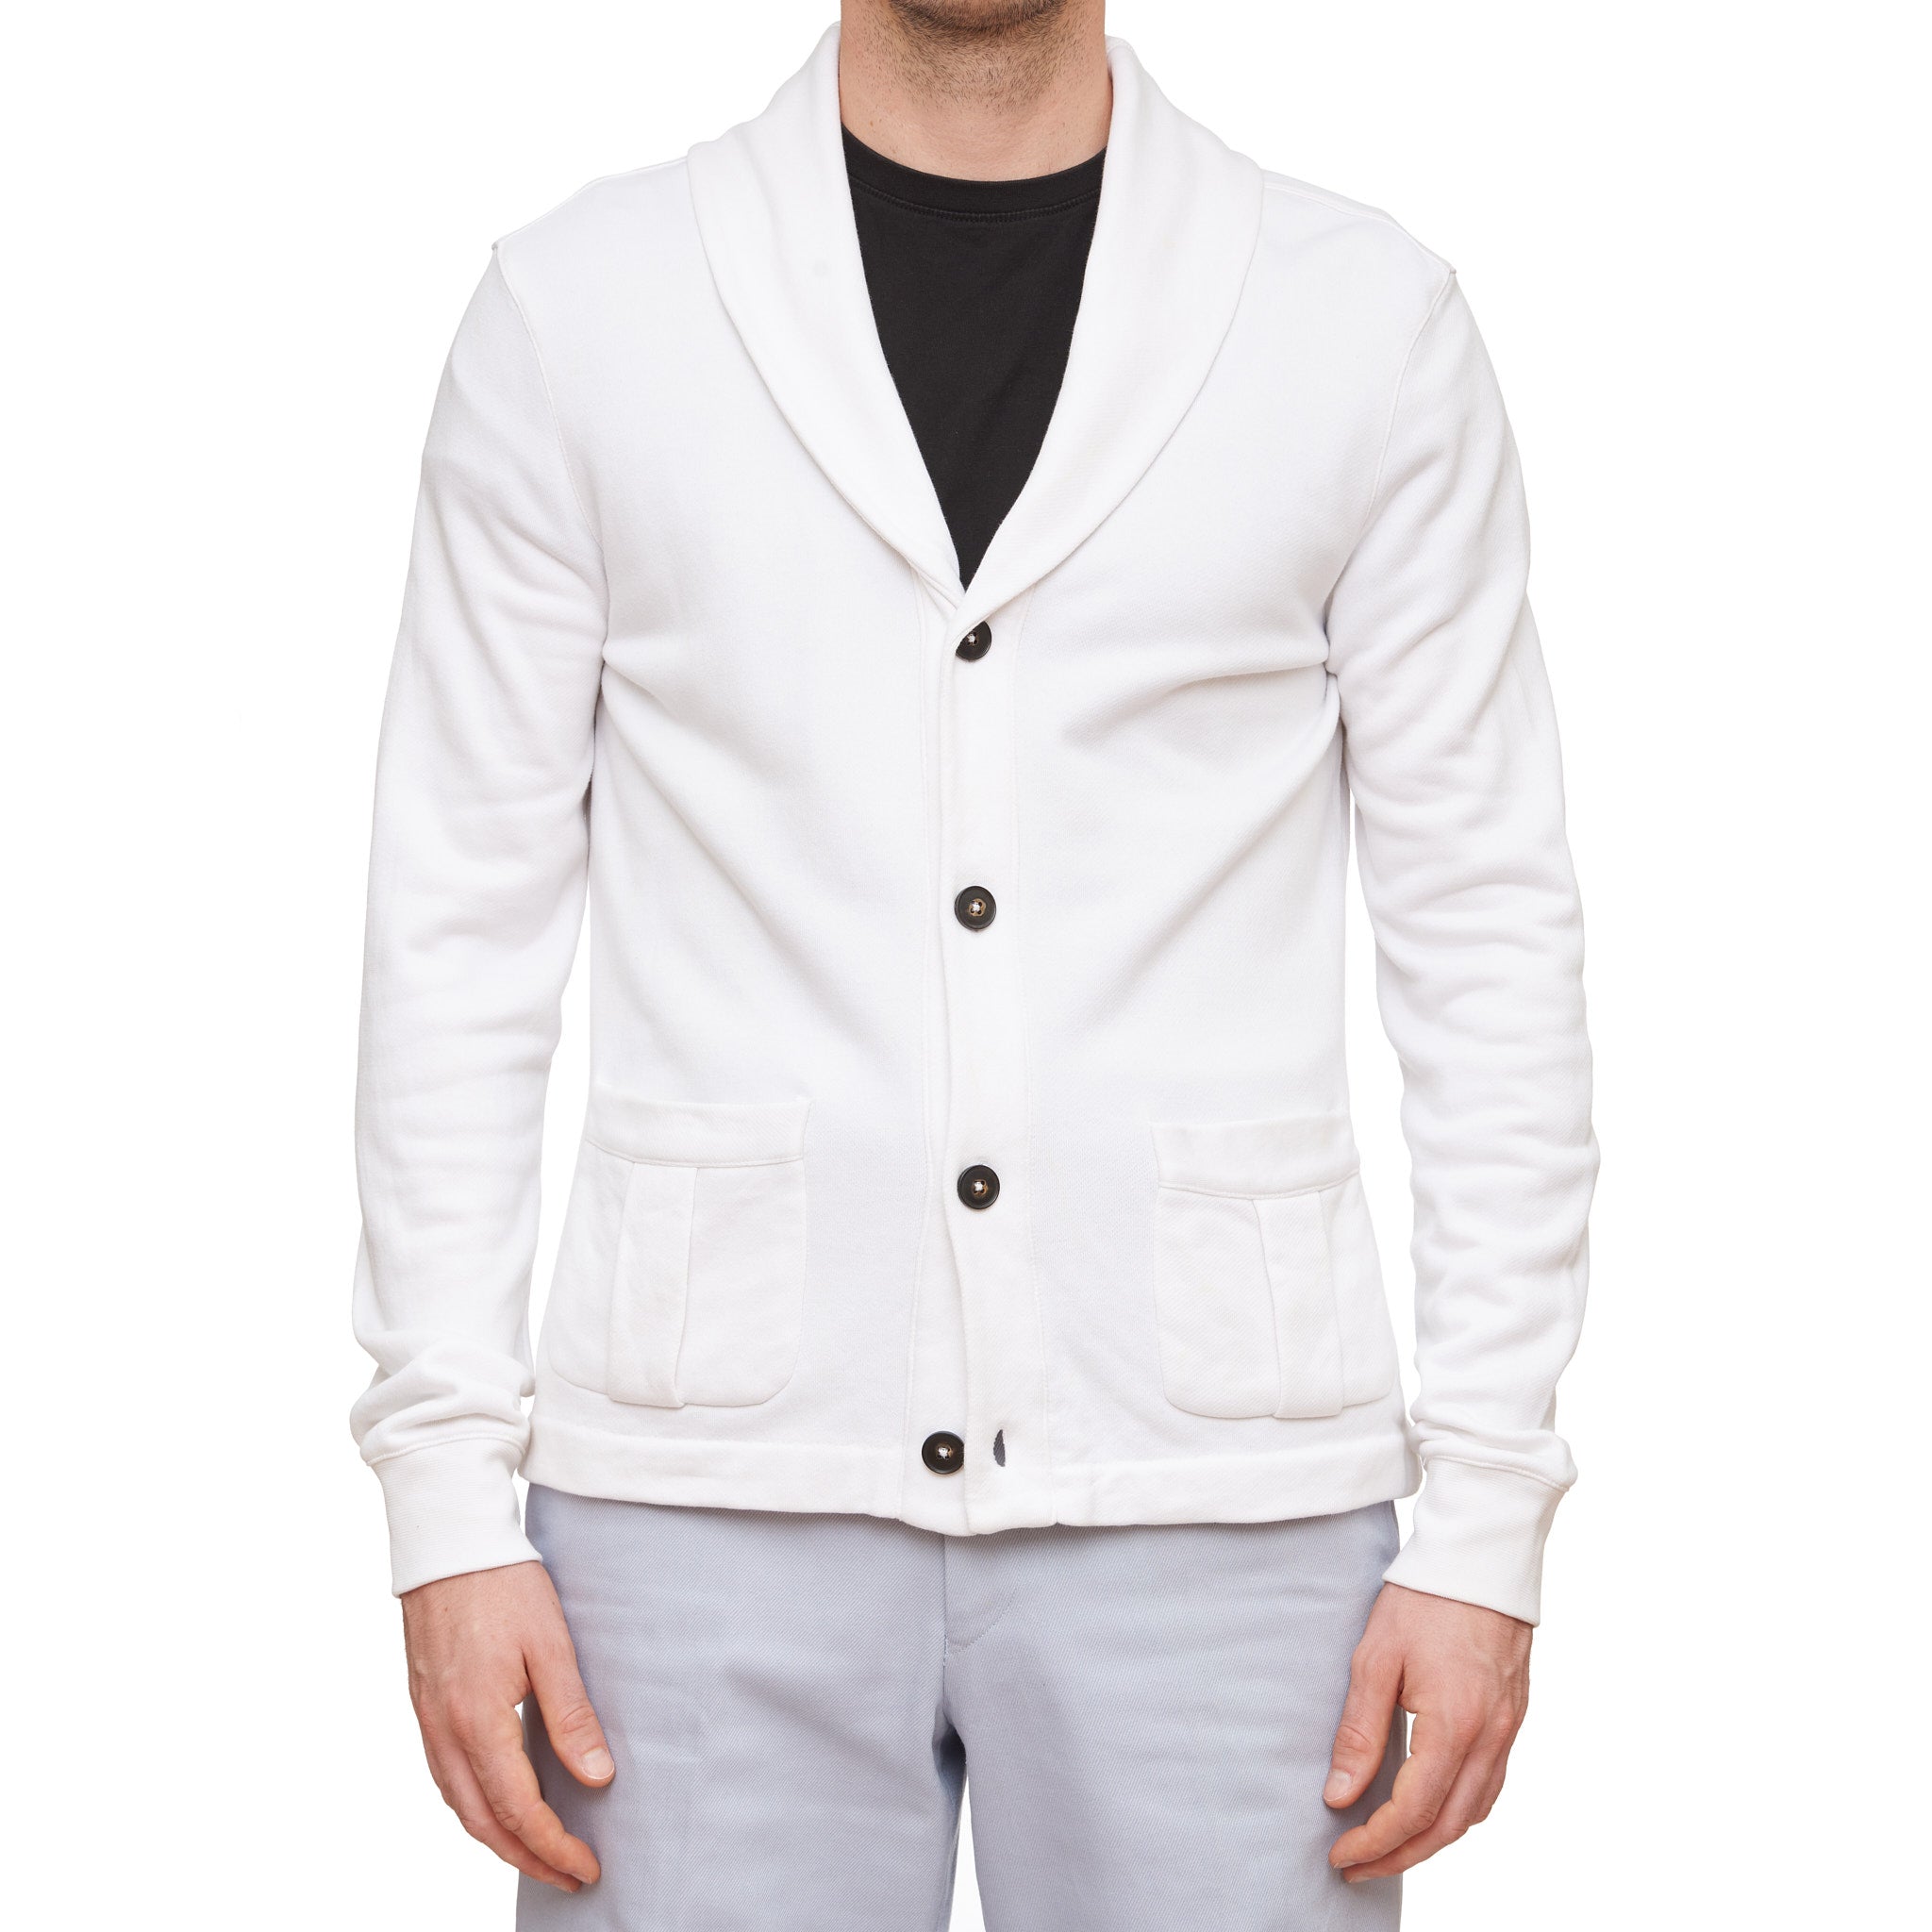 RALPH LAUREN Black Label White Cotton Shawl Collar Cardigan Sweater Size M RALPH LAUREN